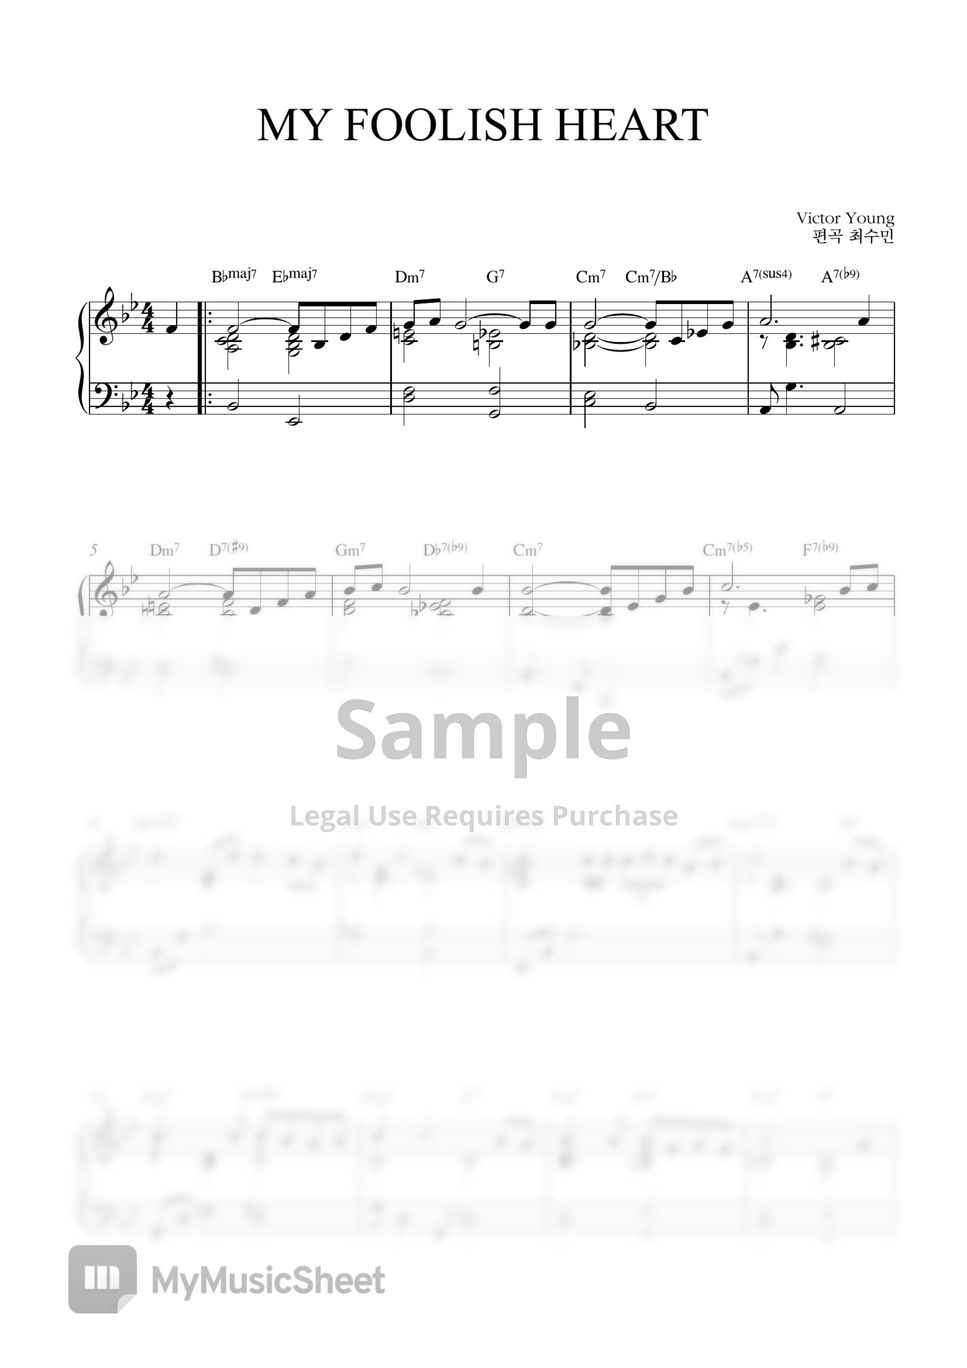 Jazz - EASY JAZZ PIANO SOLO 14곡 모음 package (REALBK.1) by 편곡 최수민